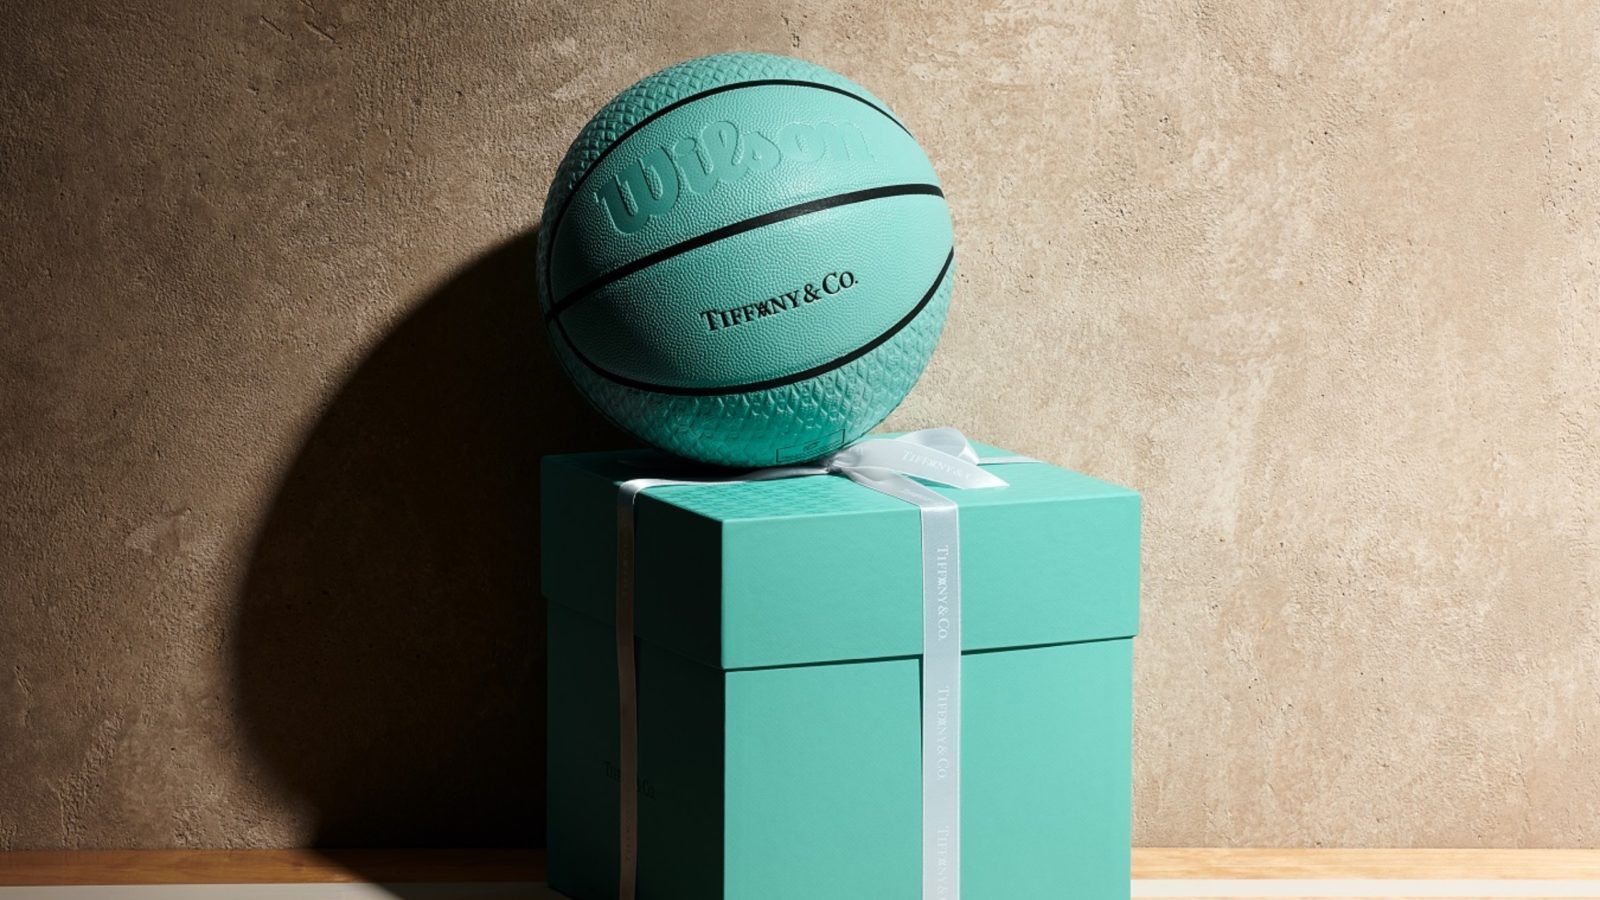 Tiffany & Co. debuts a limited edition Tiffany Blue basketball